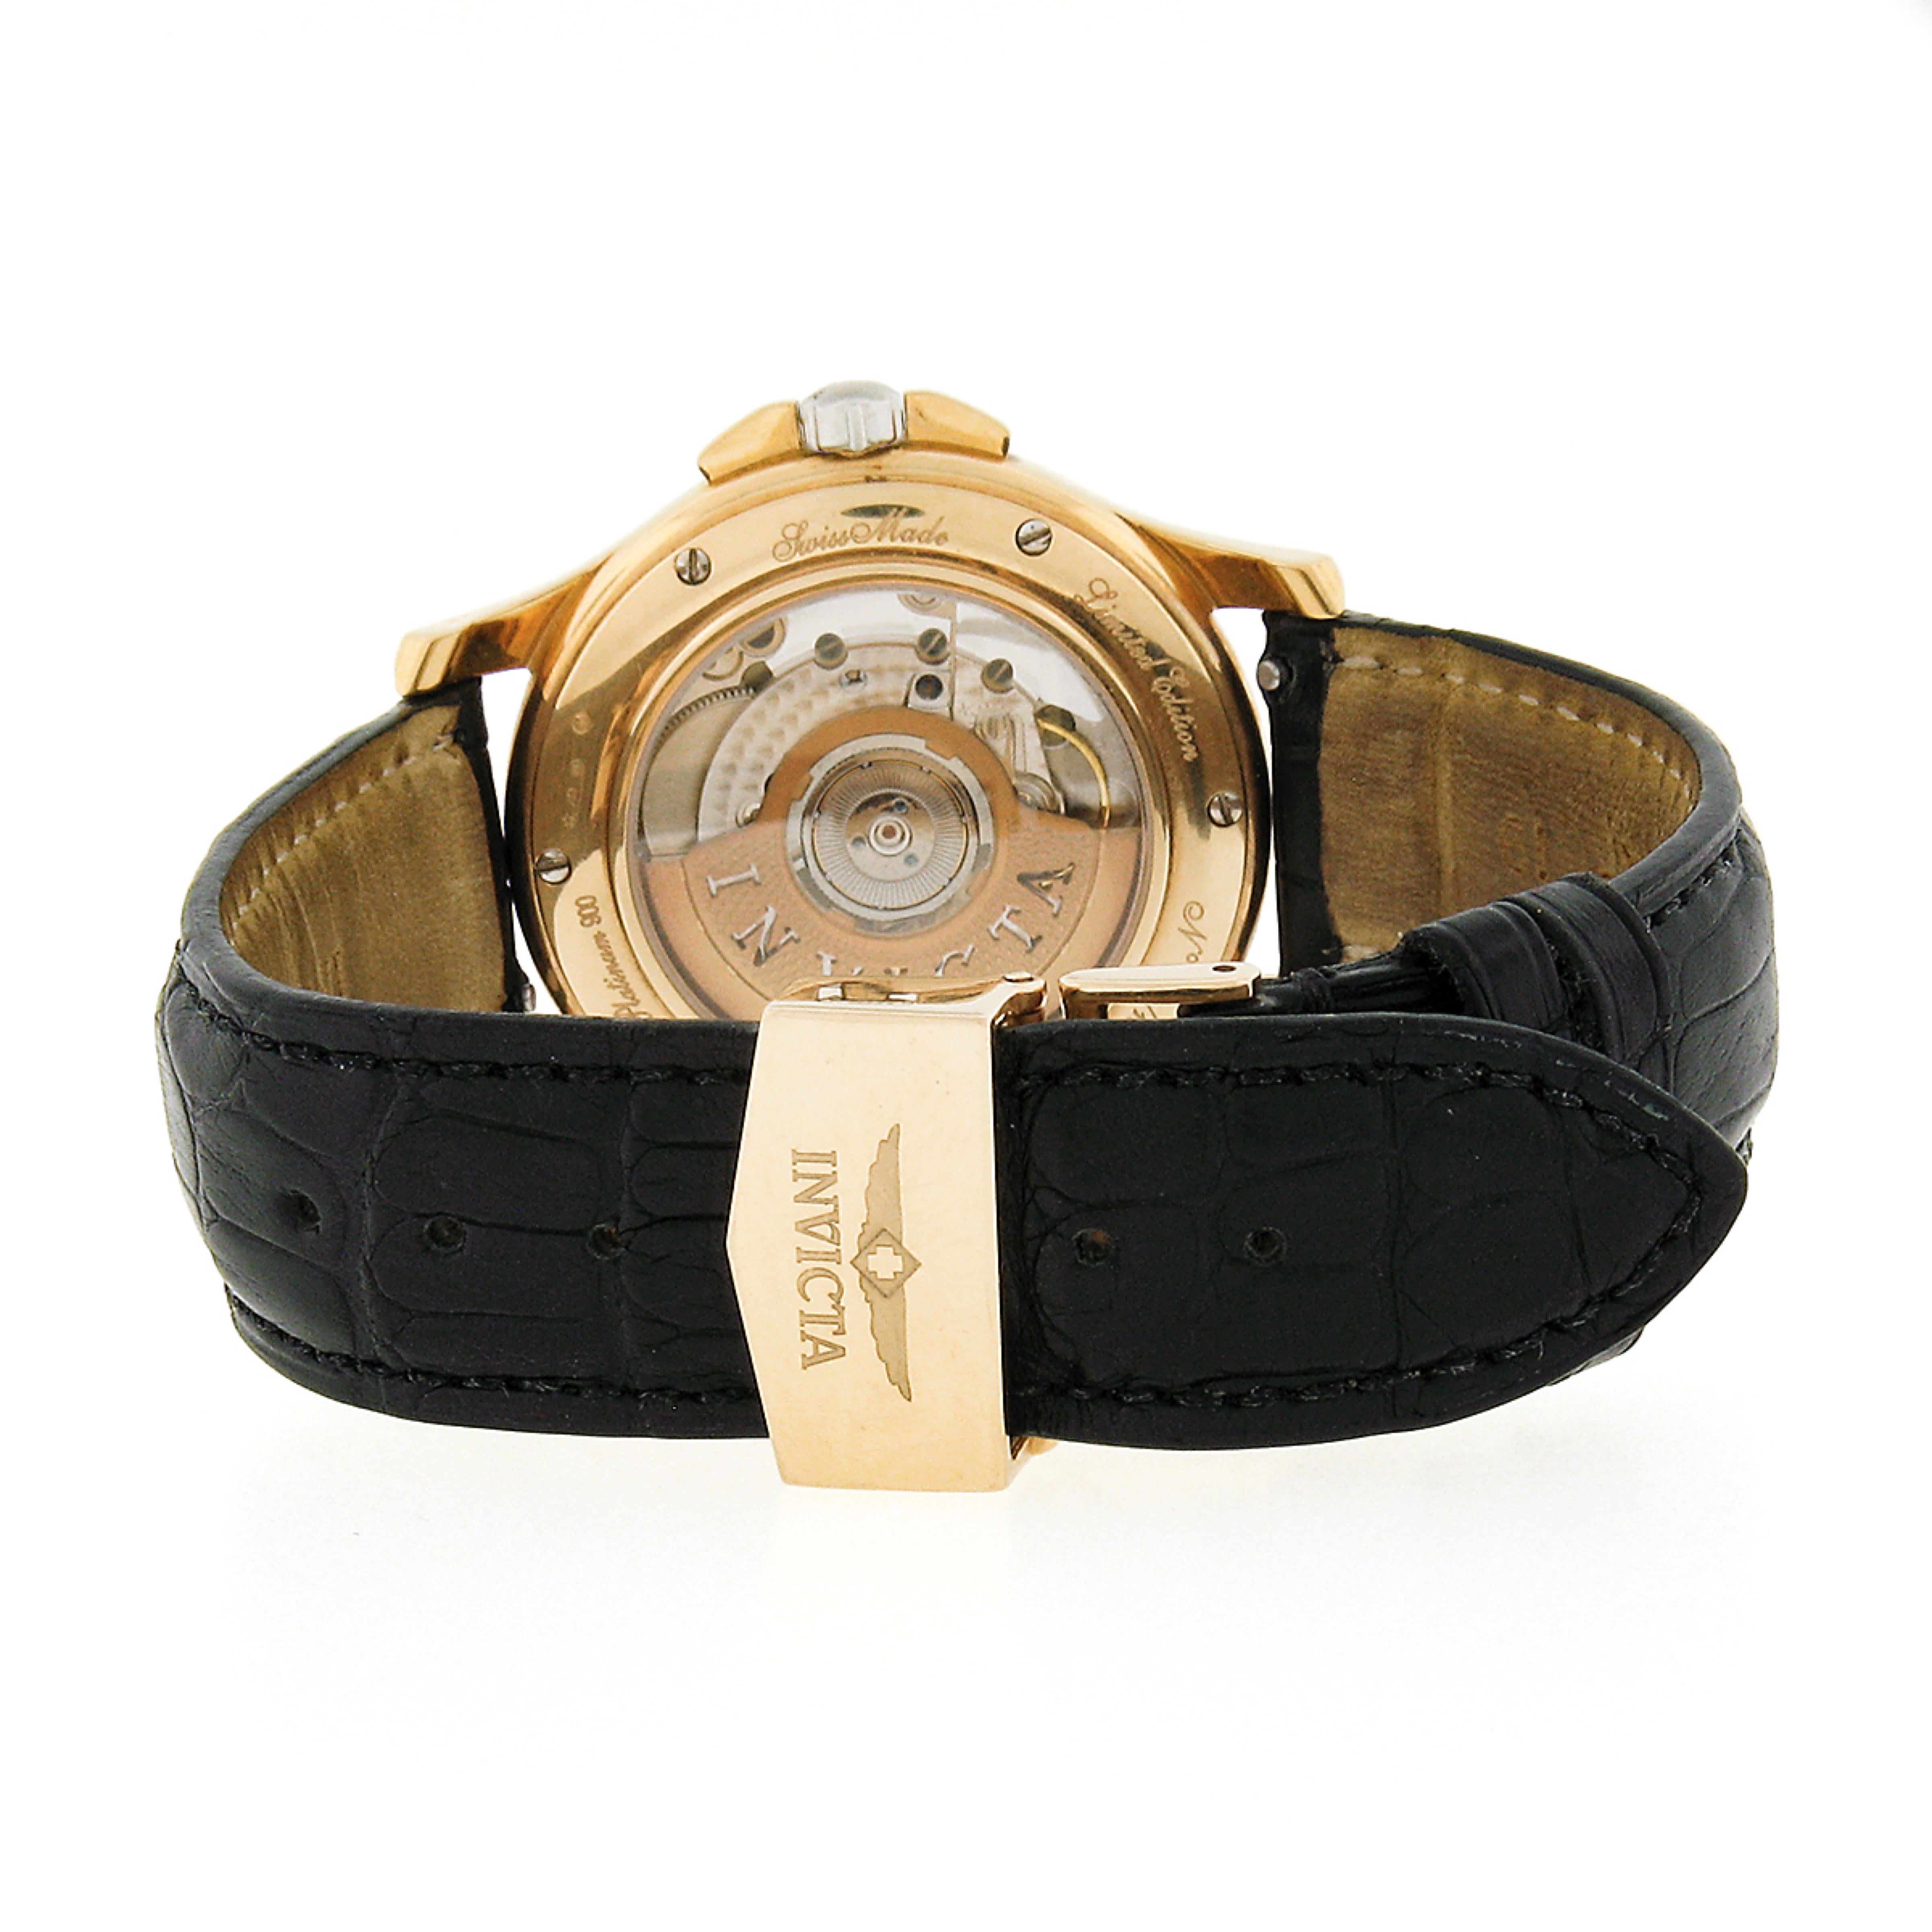 Invicta Limited Edition Platinum 18k Gold Automatic Swiss Wrist Watch 1